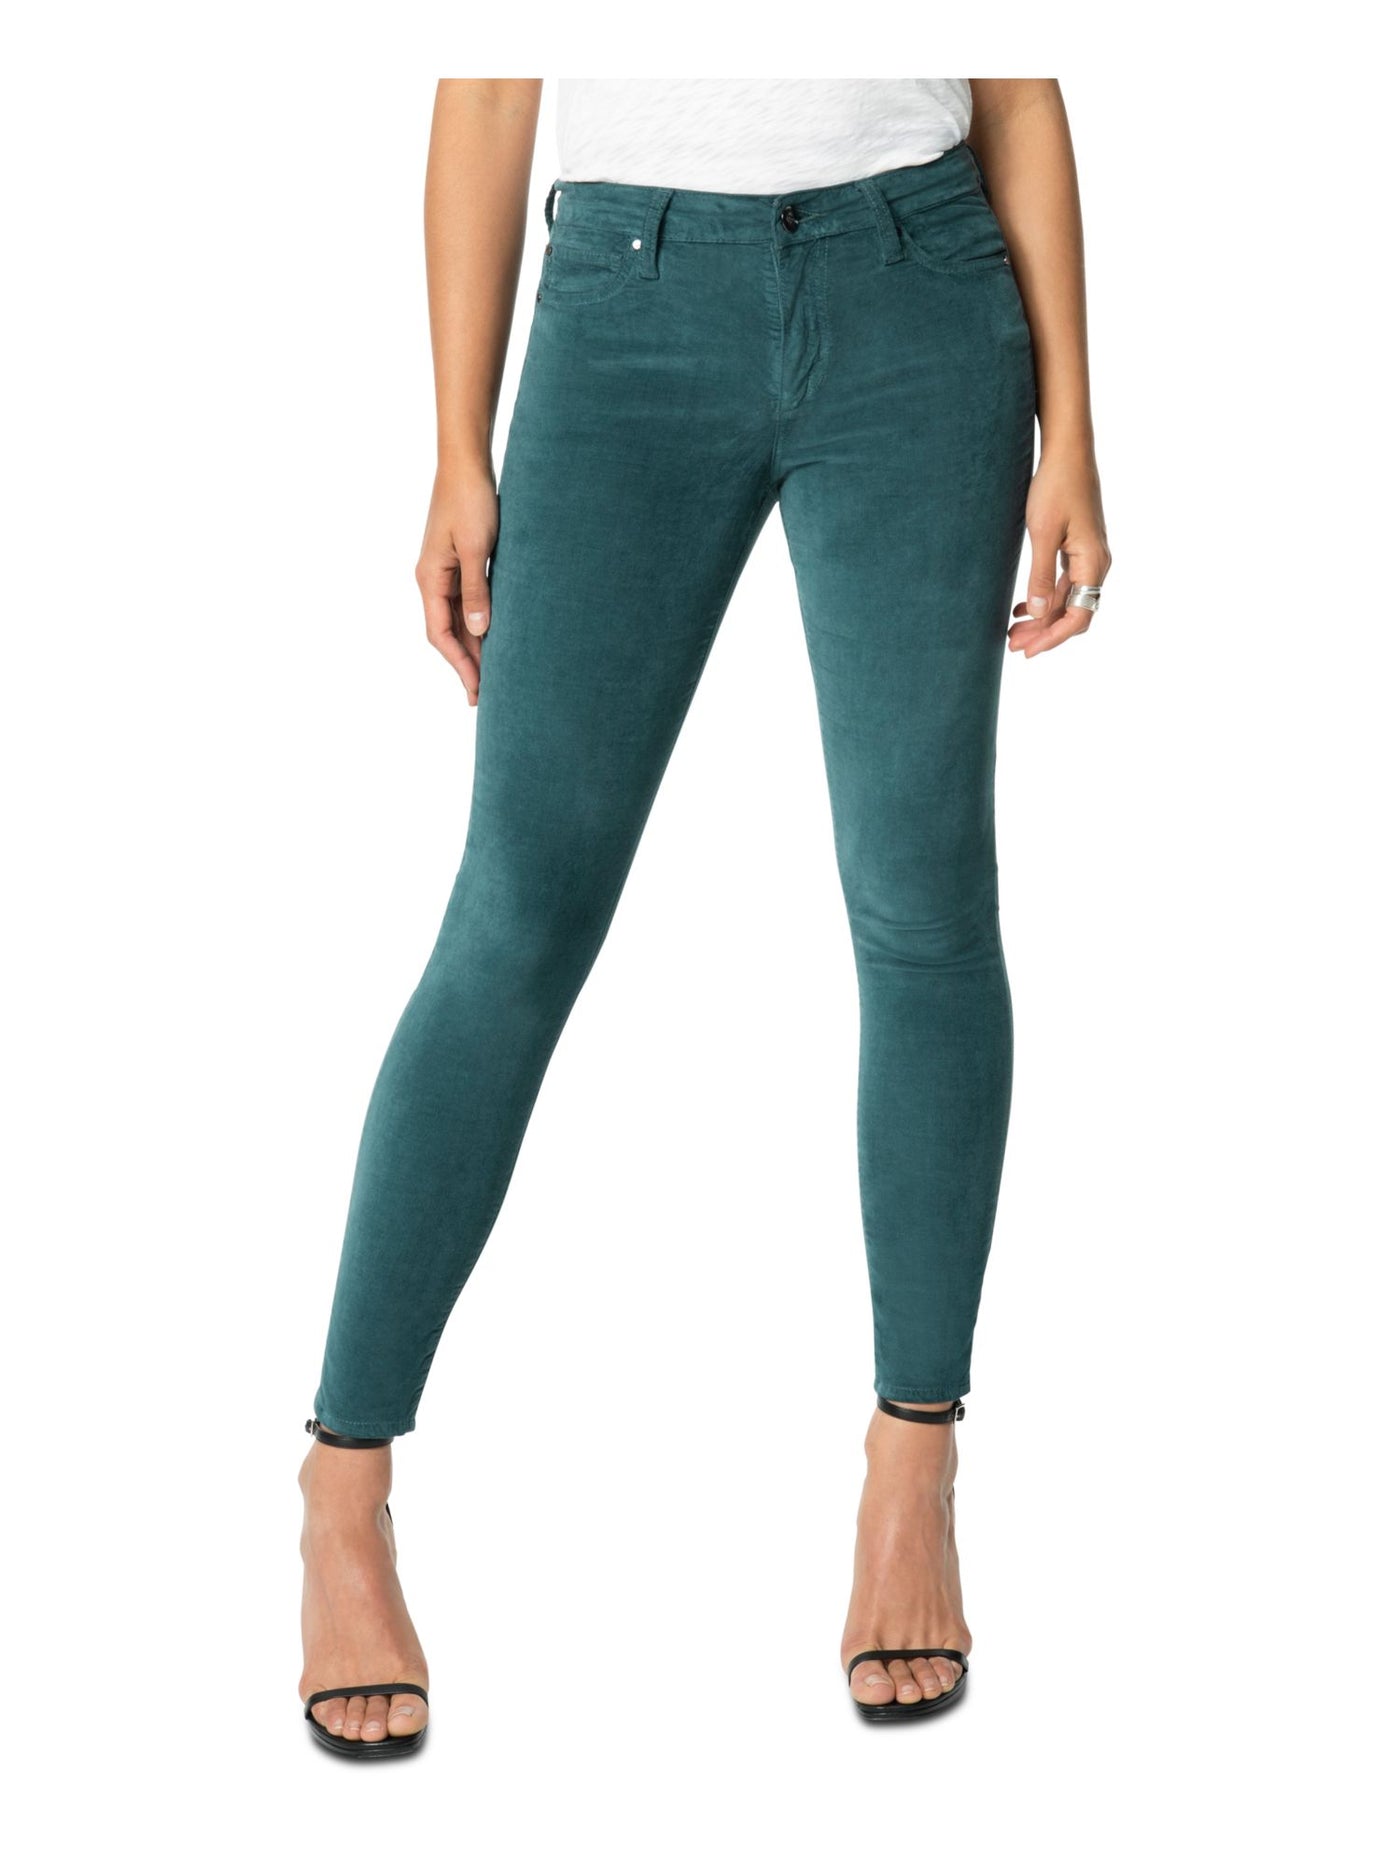 JOE'S Womens Green Pants Size: 25 Waist